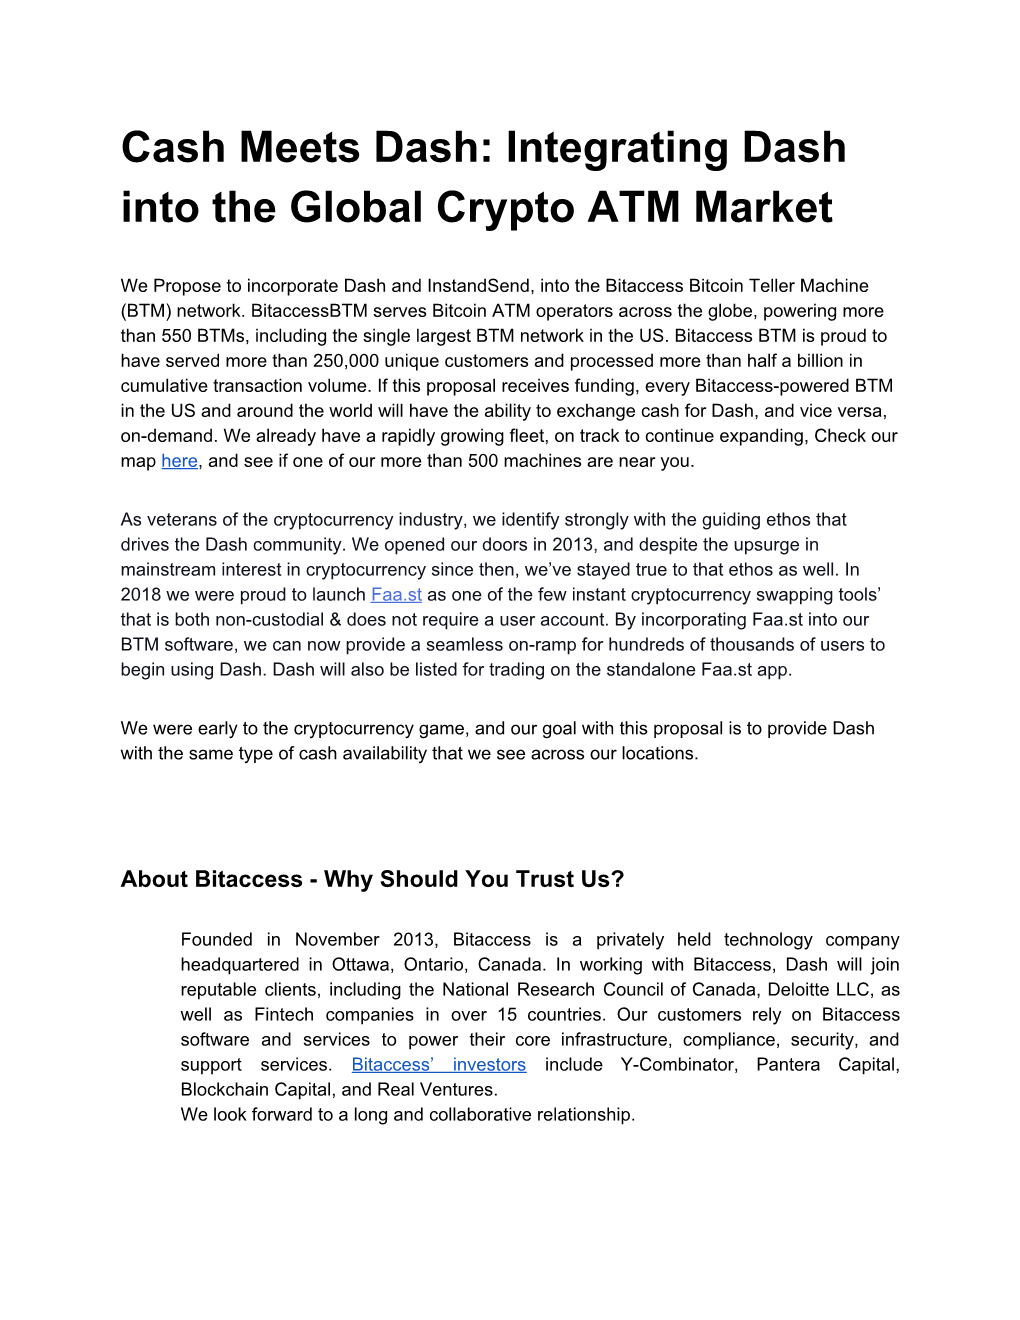 Cash Meets Dash: Integrating Dash Into the Global Crypto ATM Market